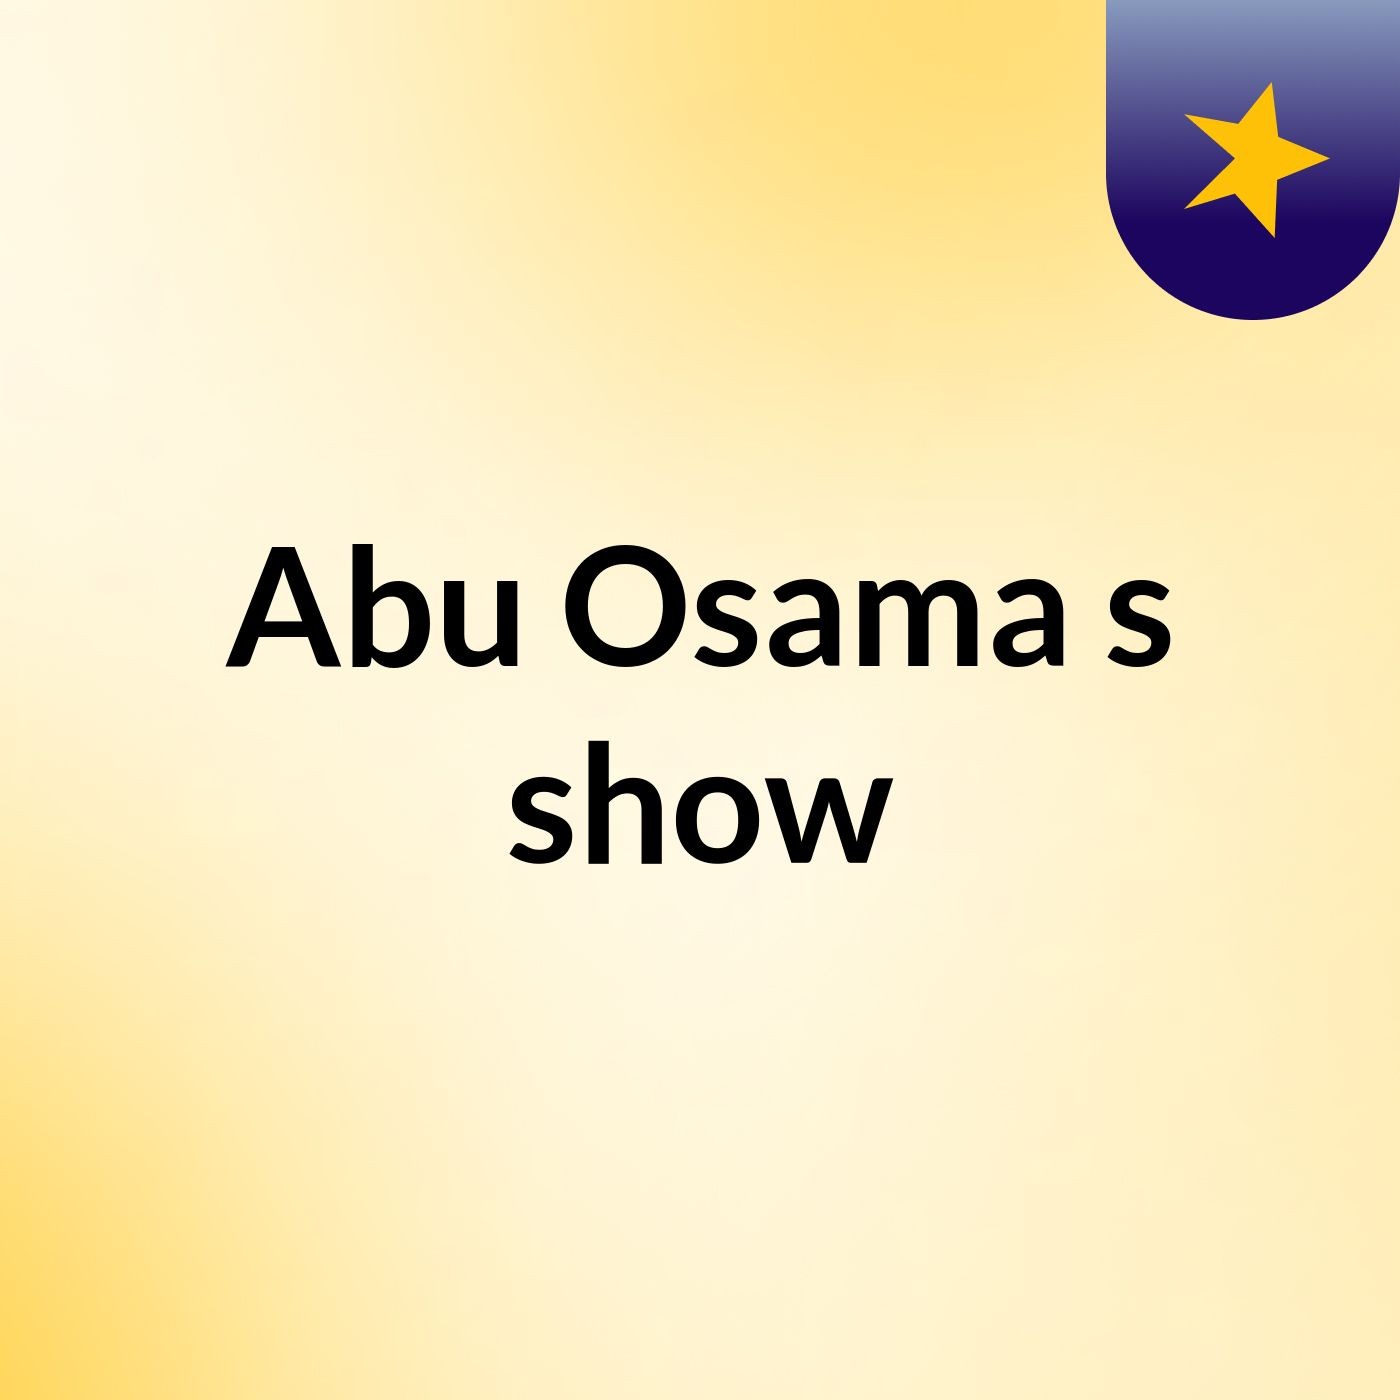 Abu Osama's show